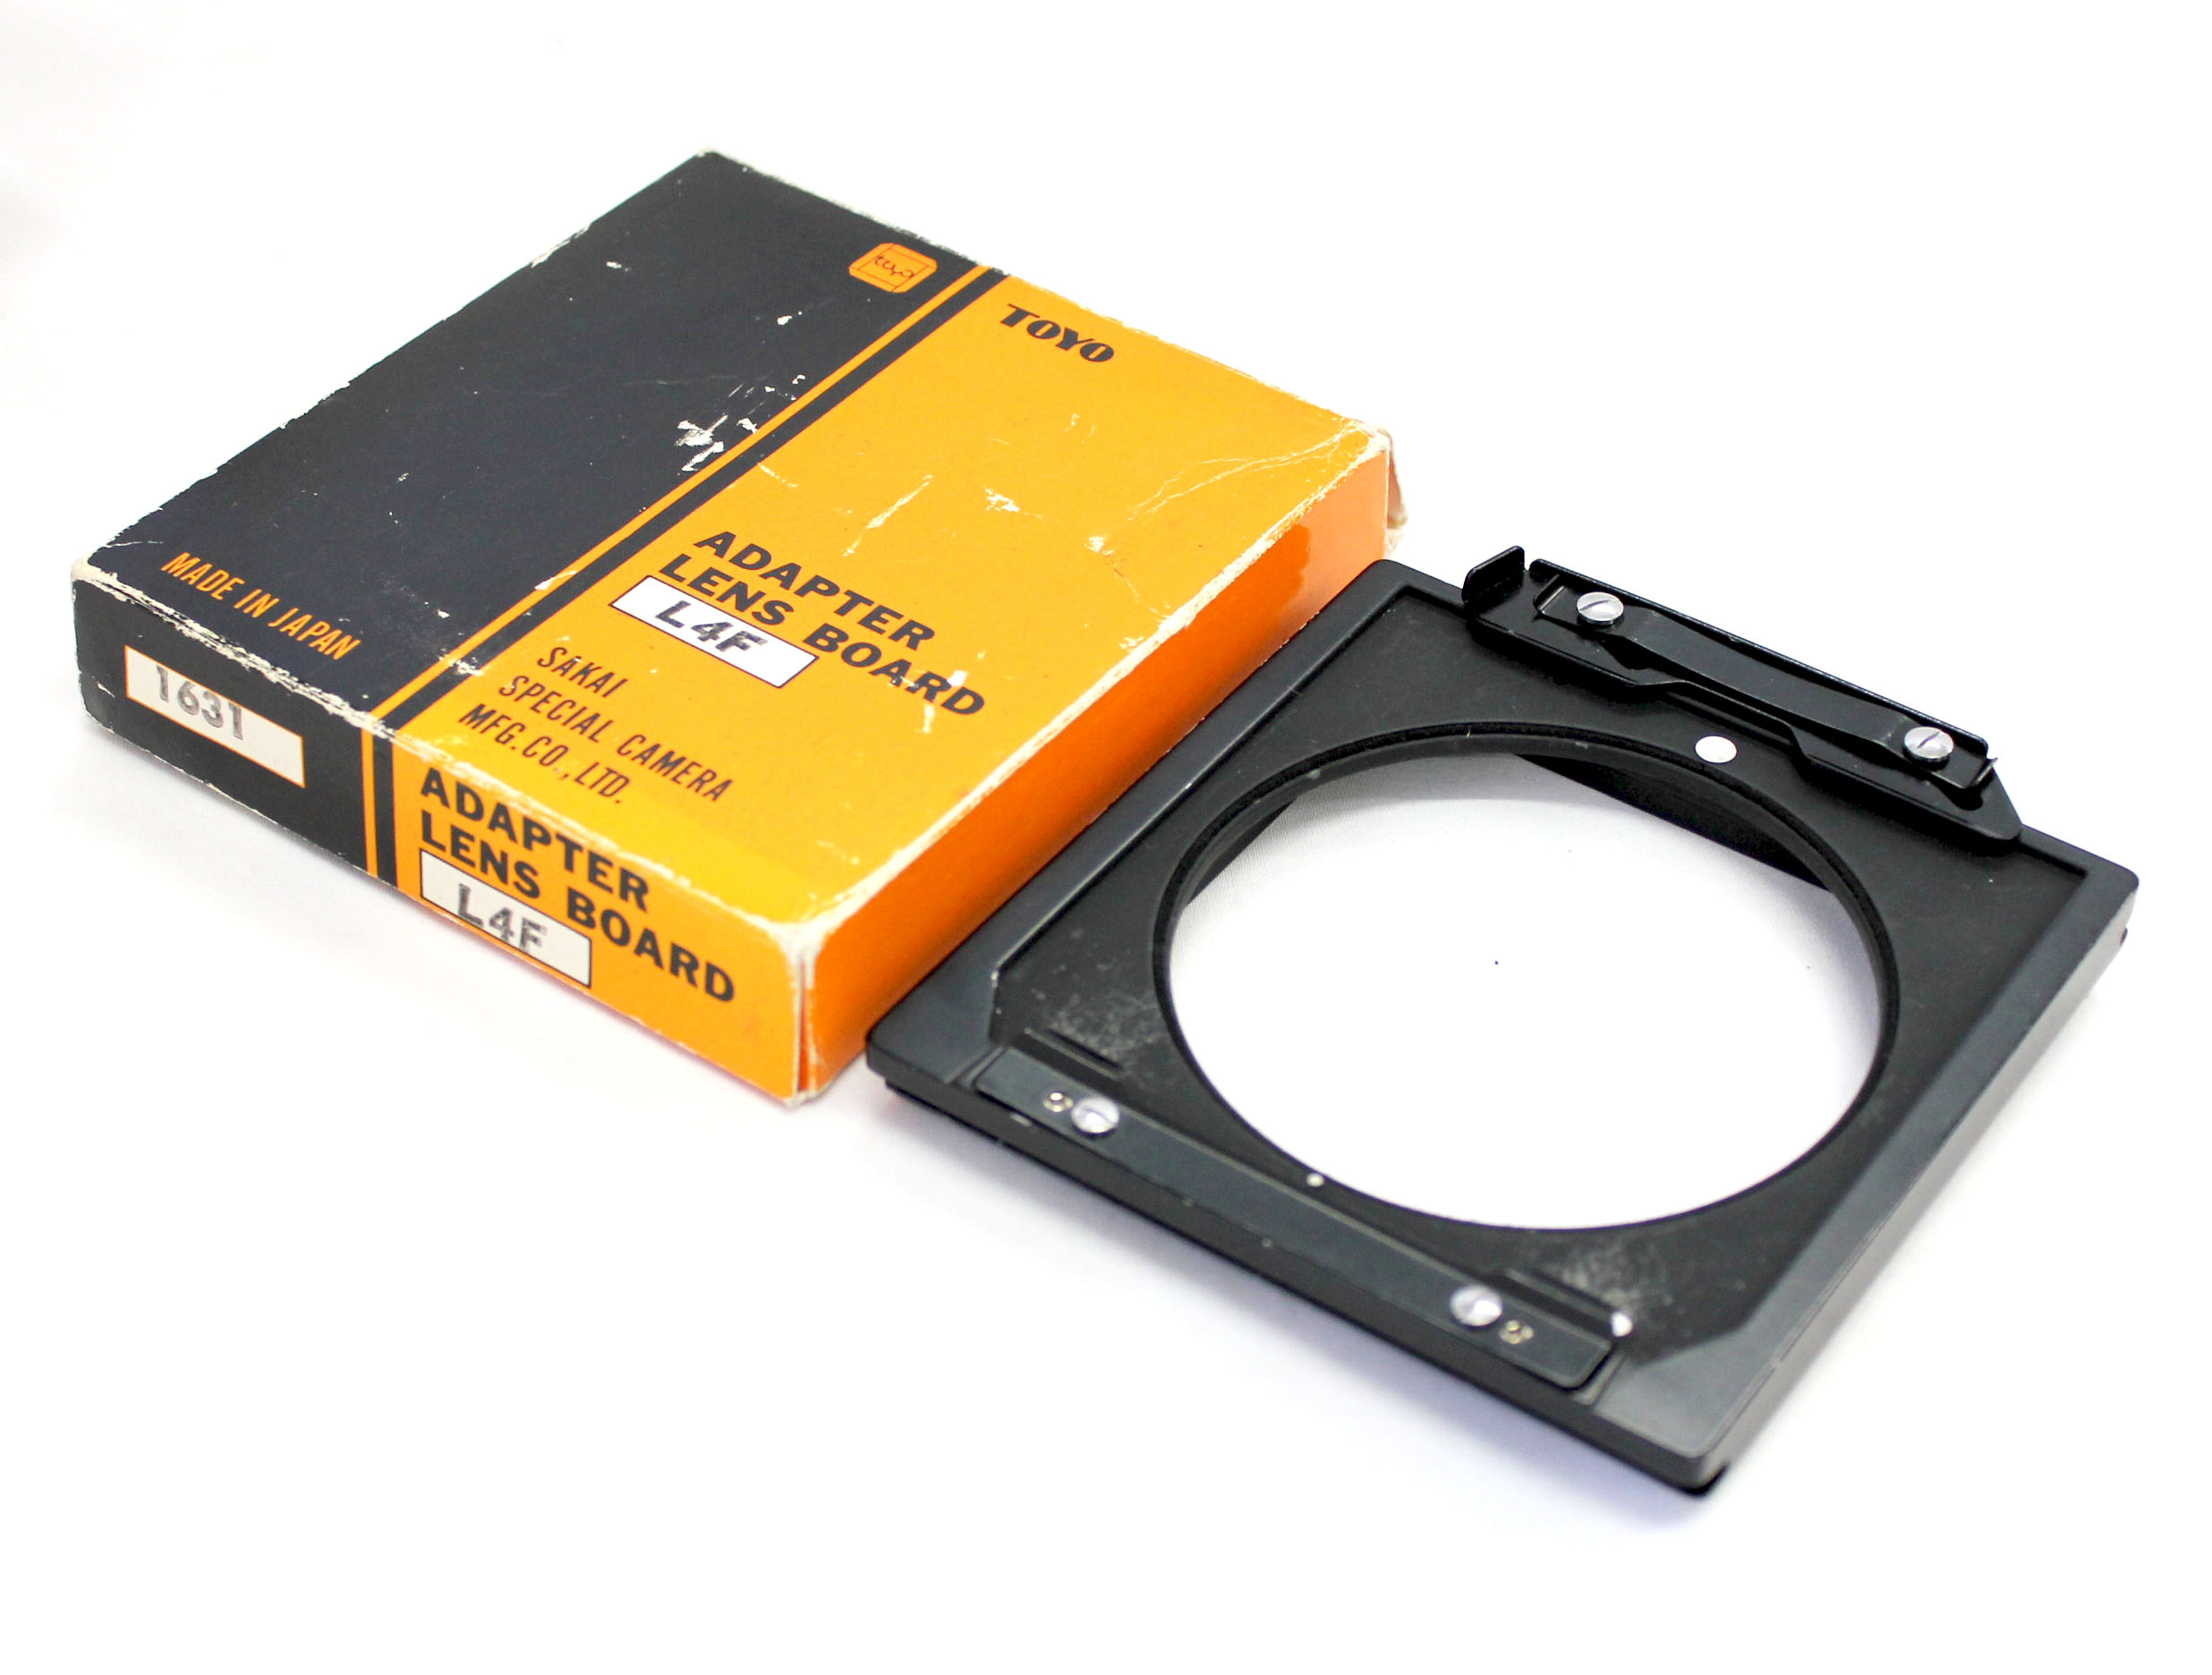 Japan Used Camera Shop | Toyo Linhof Lens Board Adapter No.1631 AL4F for Toyo Field 45A 45A II in Box from Japan